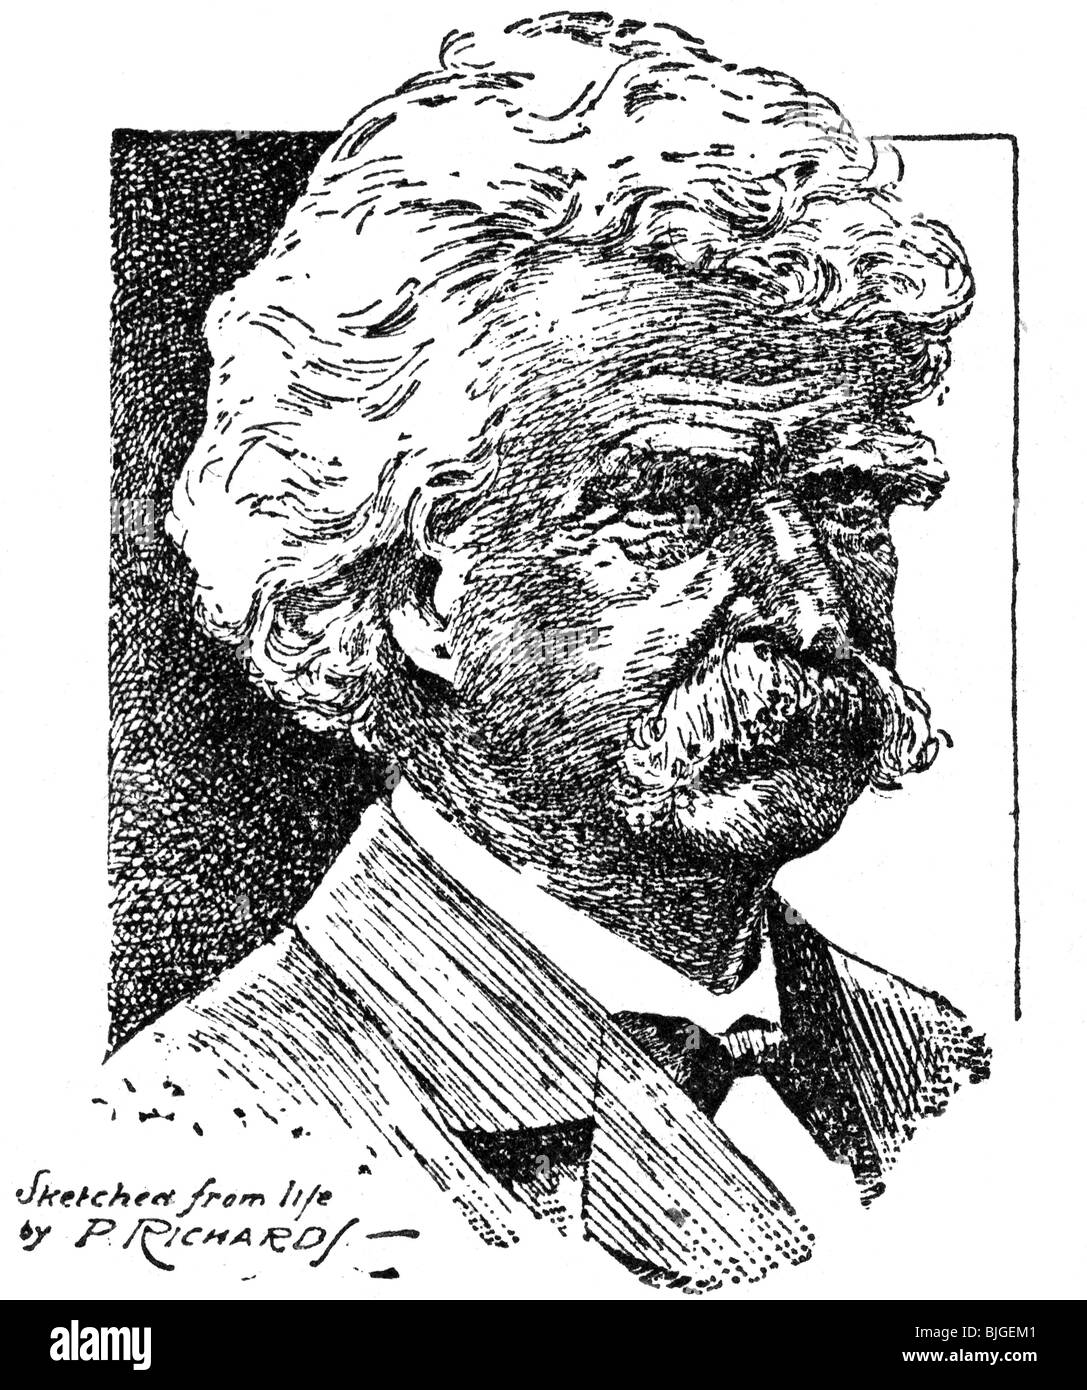 Twain, Mark, 30.11.1835 - 21.4.1910, American author / writer, humorist, sketch, by P. Richards, Stock Photo